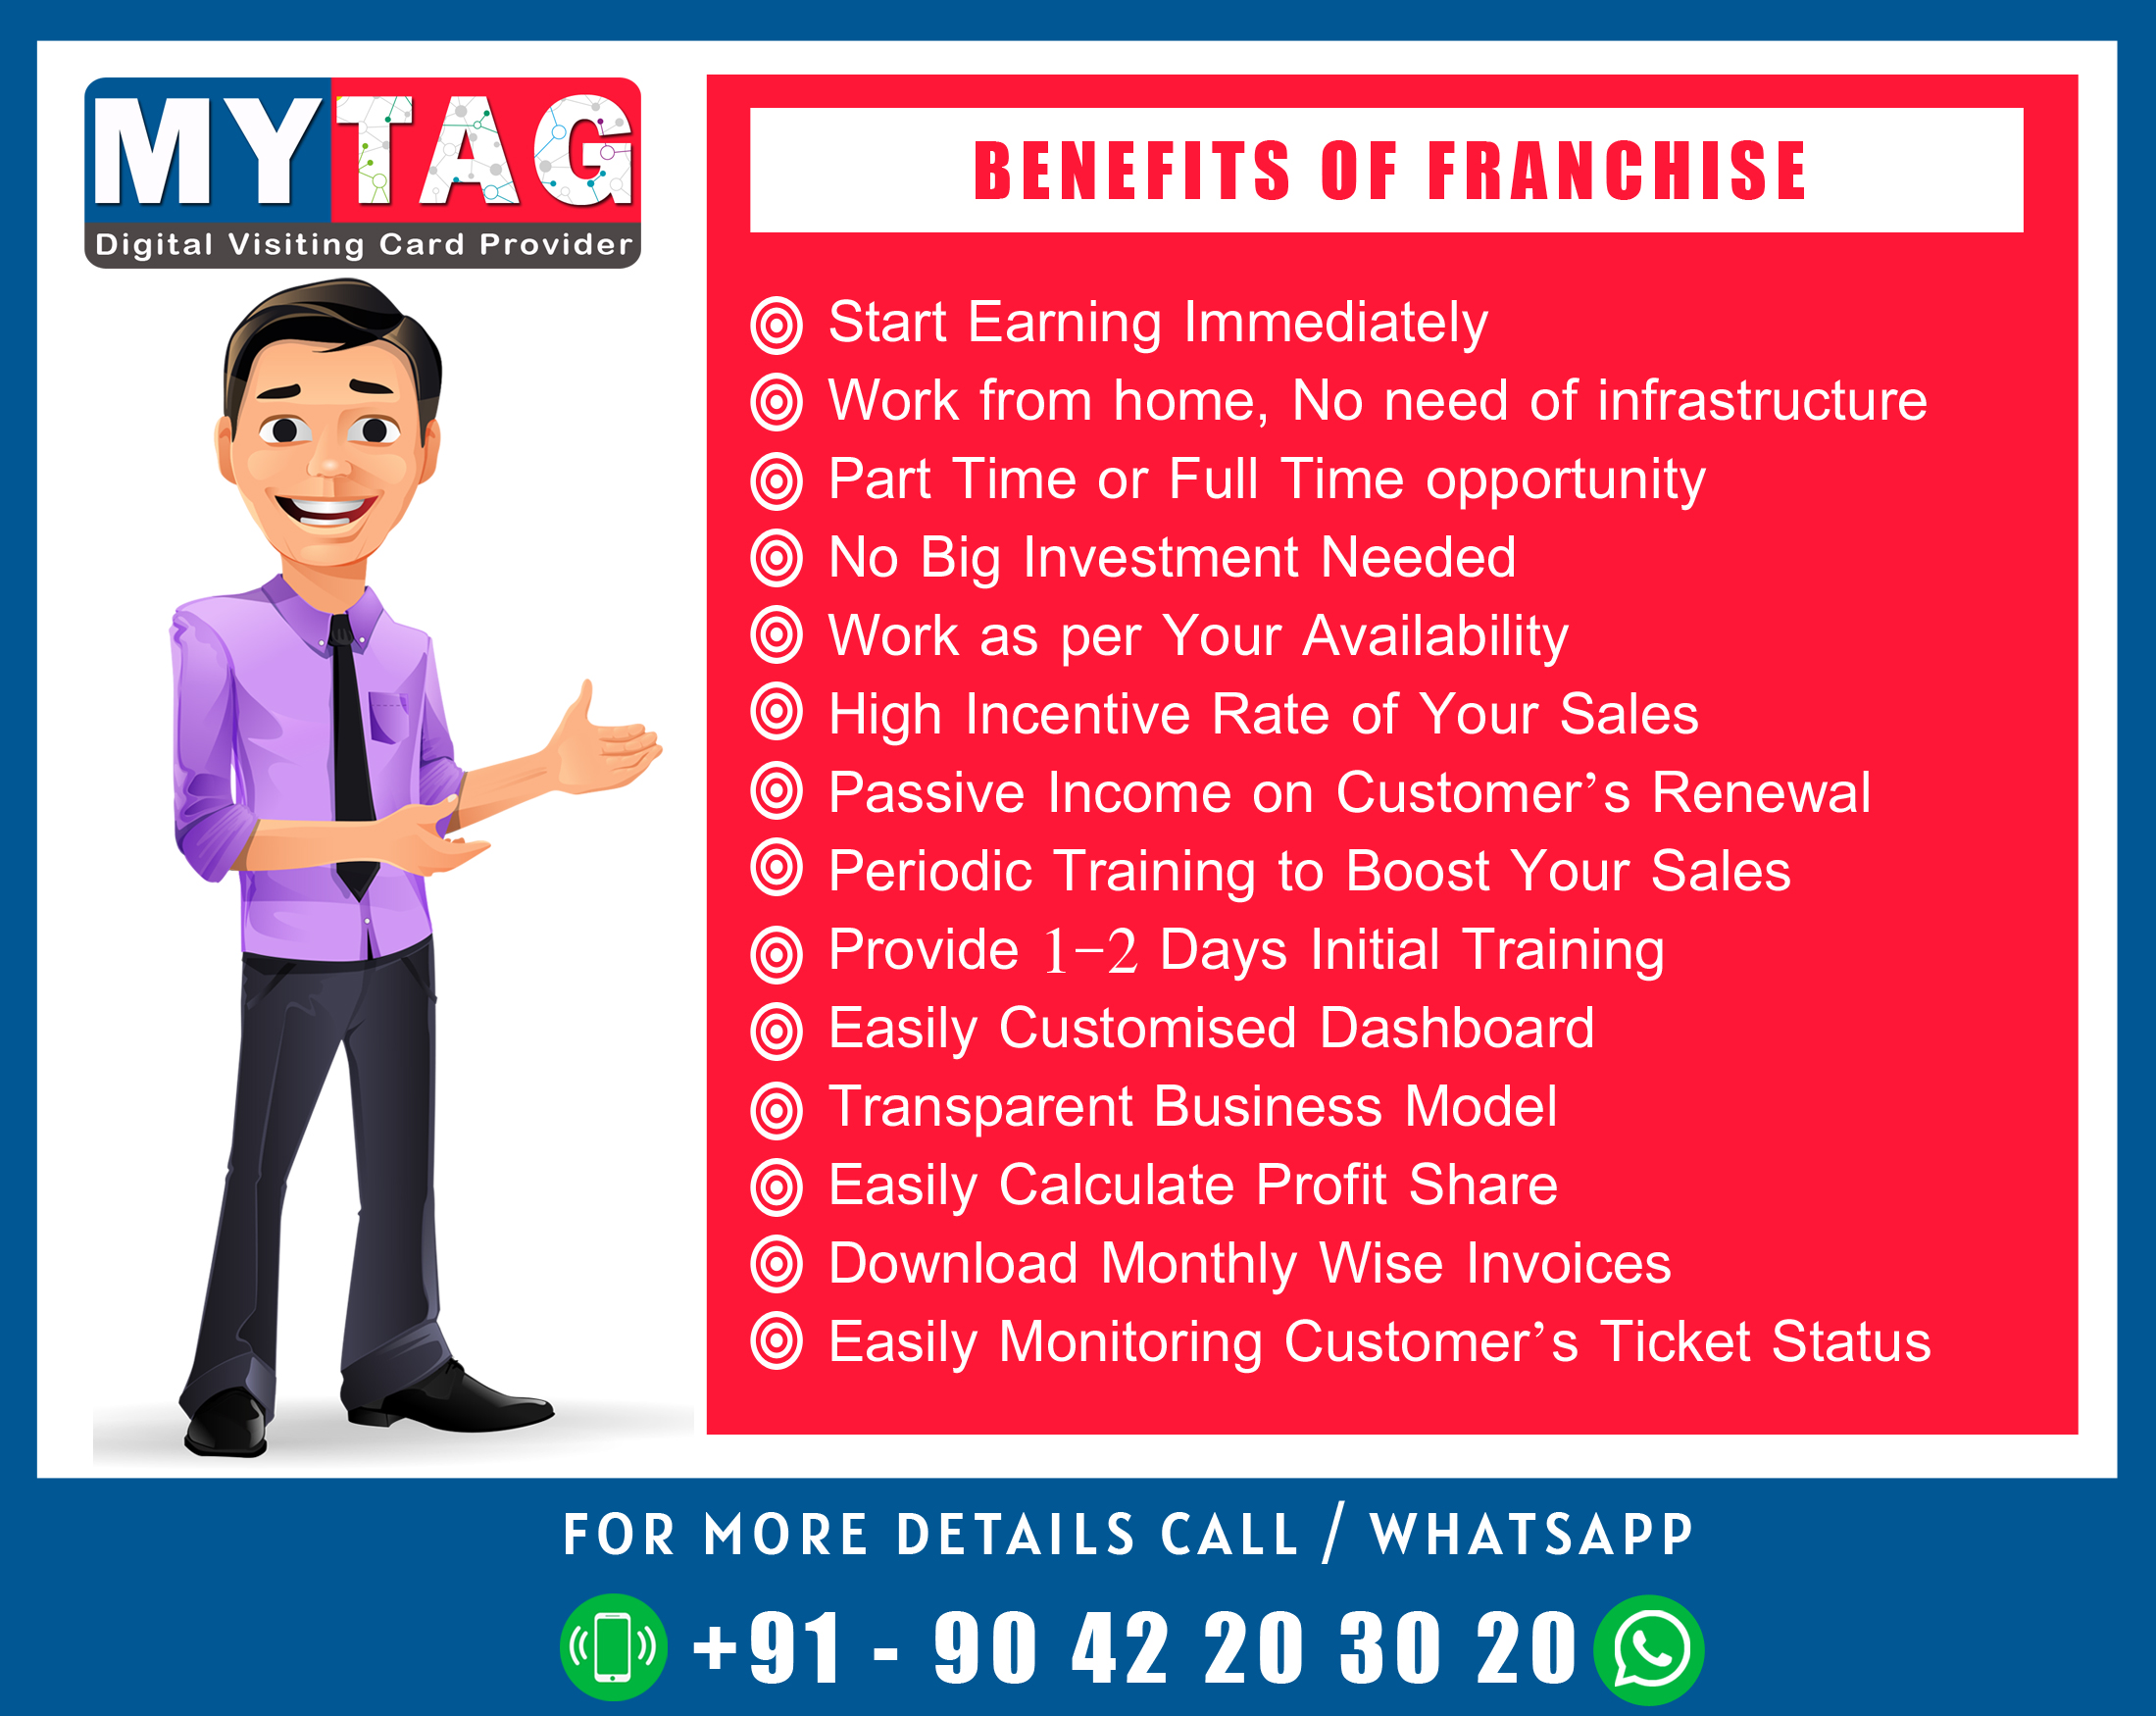 MyTag Digital Visiting Card Franchise Benefits Franchisee Advantages MyTag Mini Website Provider